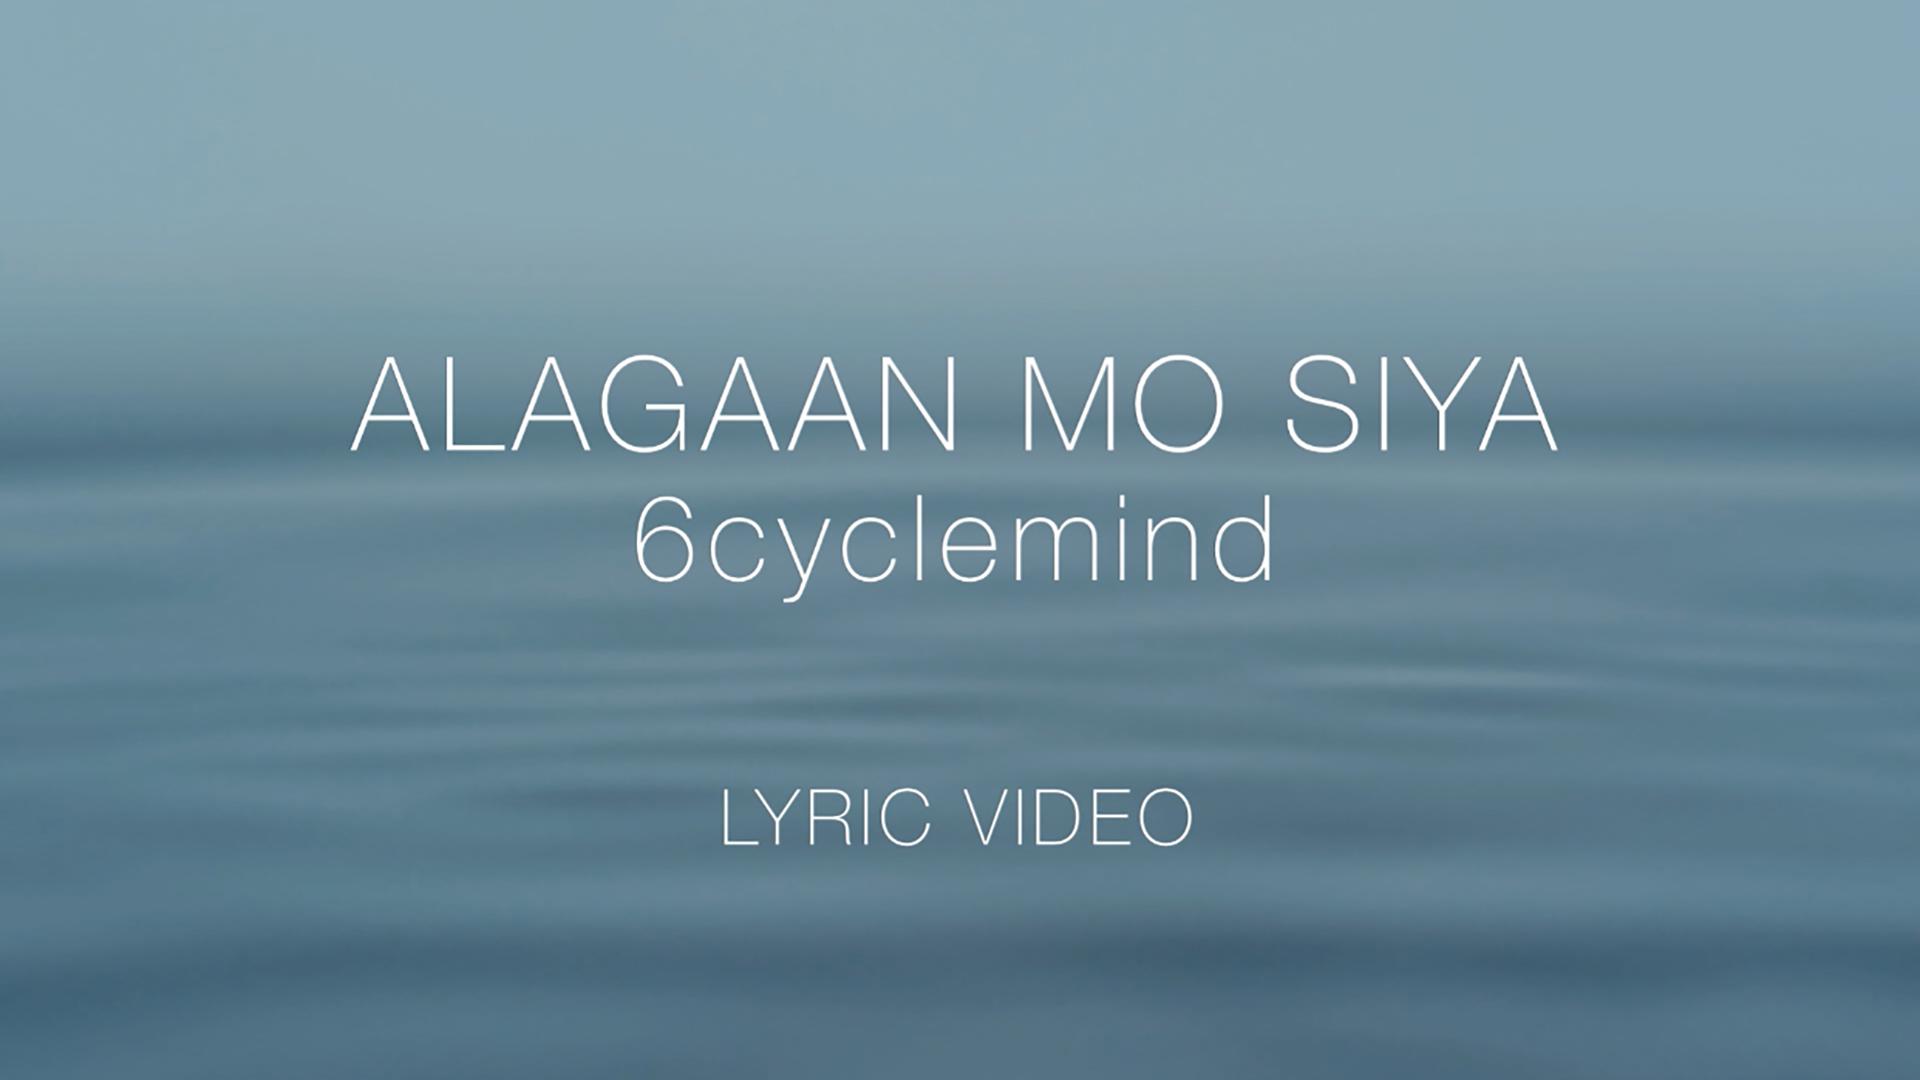 6CycleMind - Alagaan Mo Sya [Lyric Video]